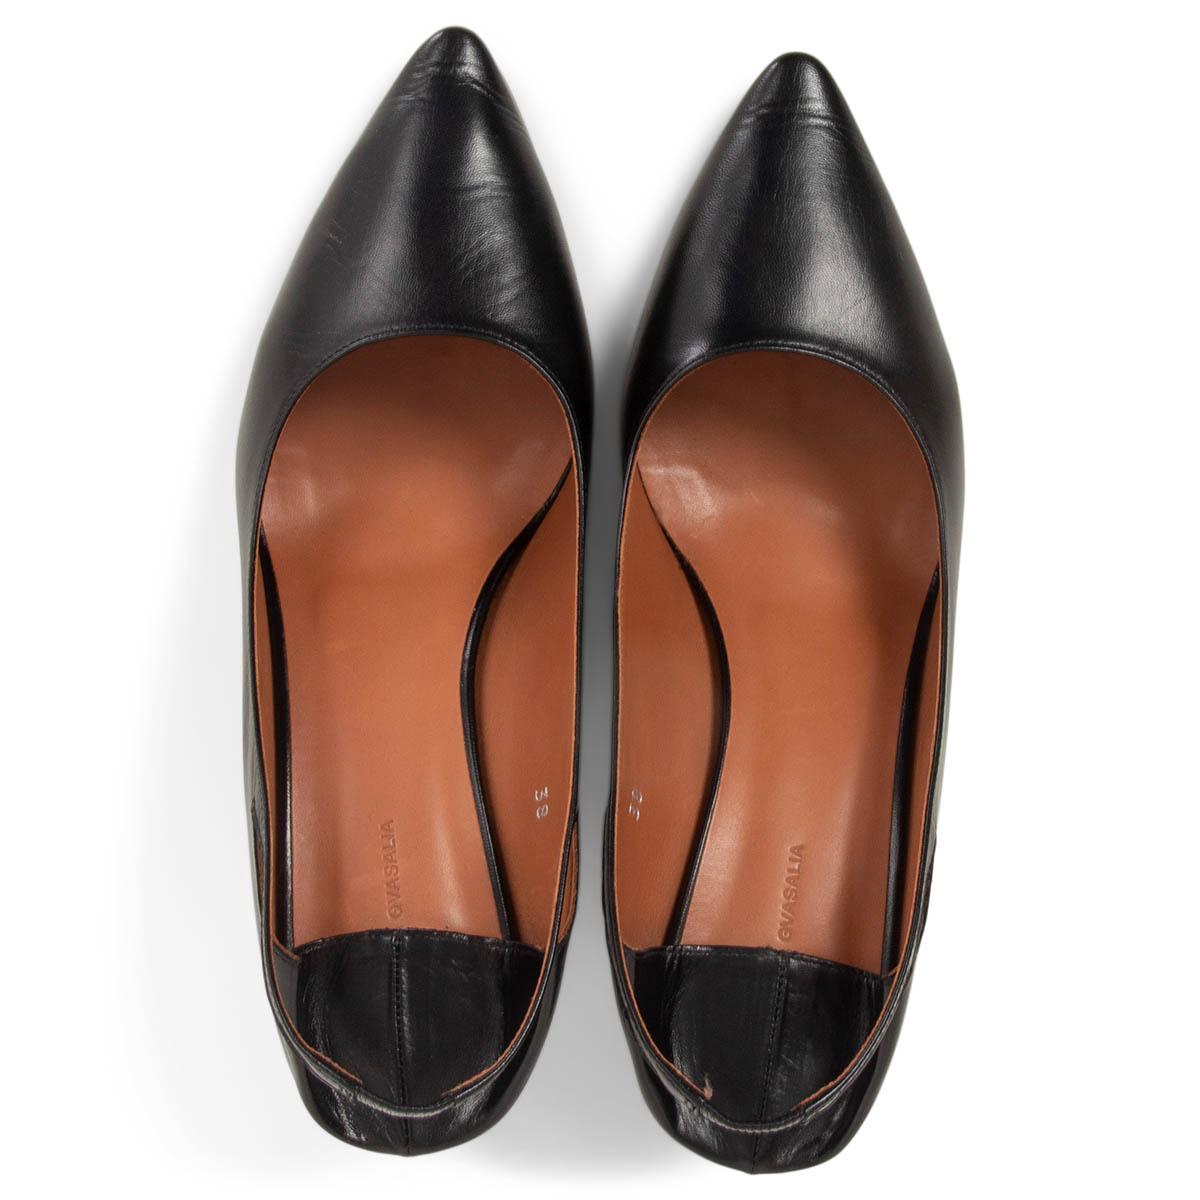 Women's VETEMENTS black leather KITTEN HEEL Pumps Shoes 38